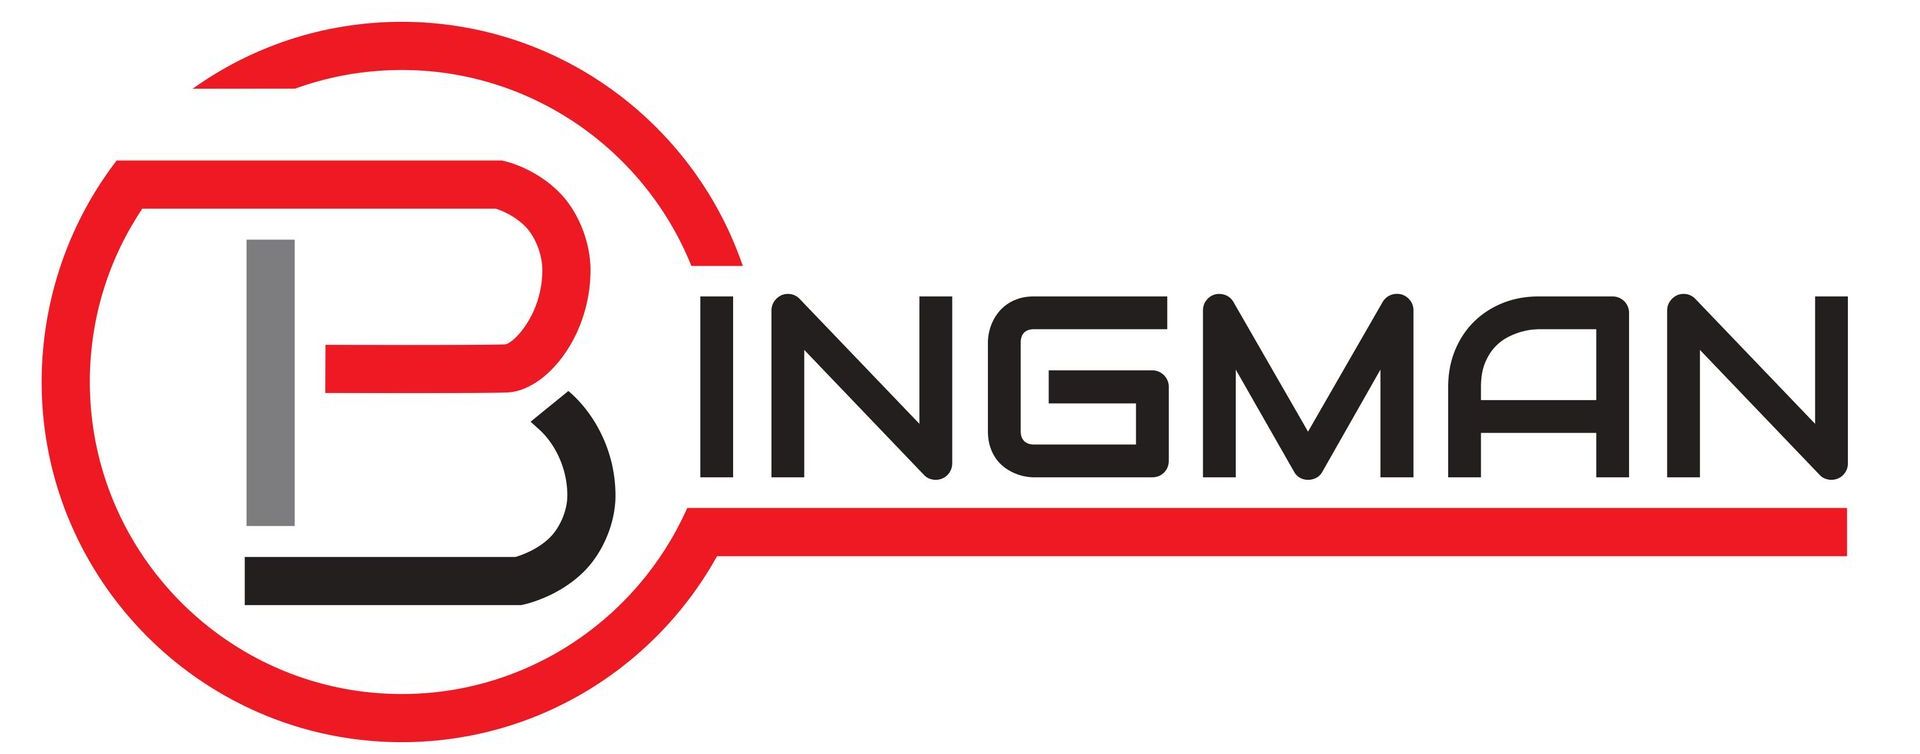 BINGMAN Construction Company - Logo